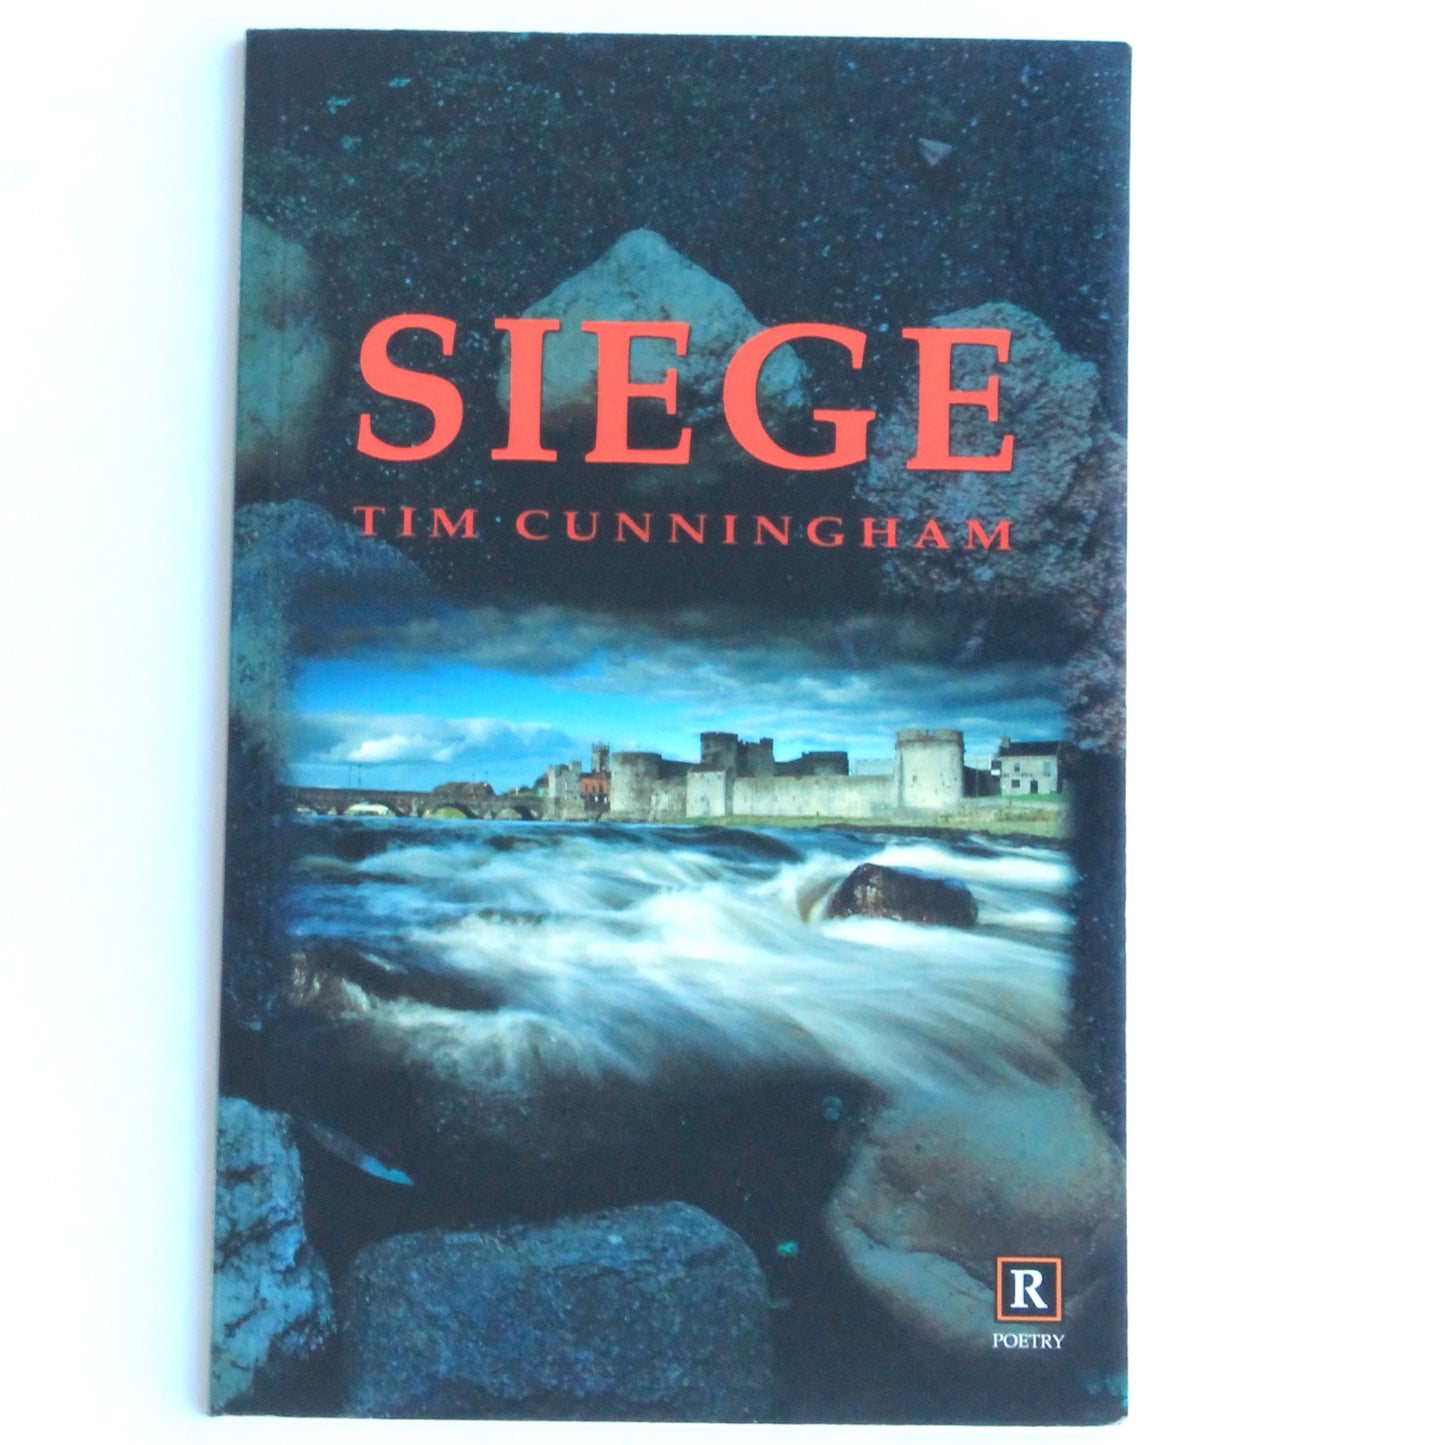 Siege - Tim Cunningham